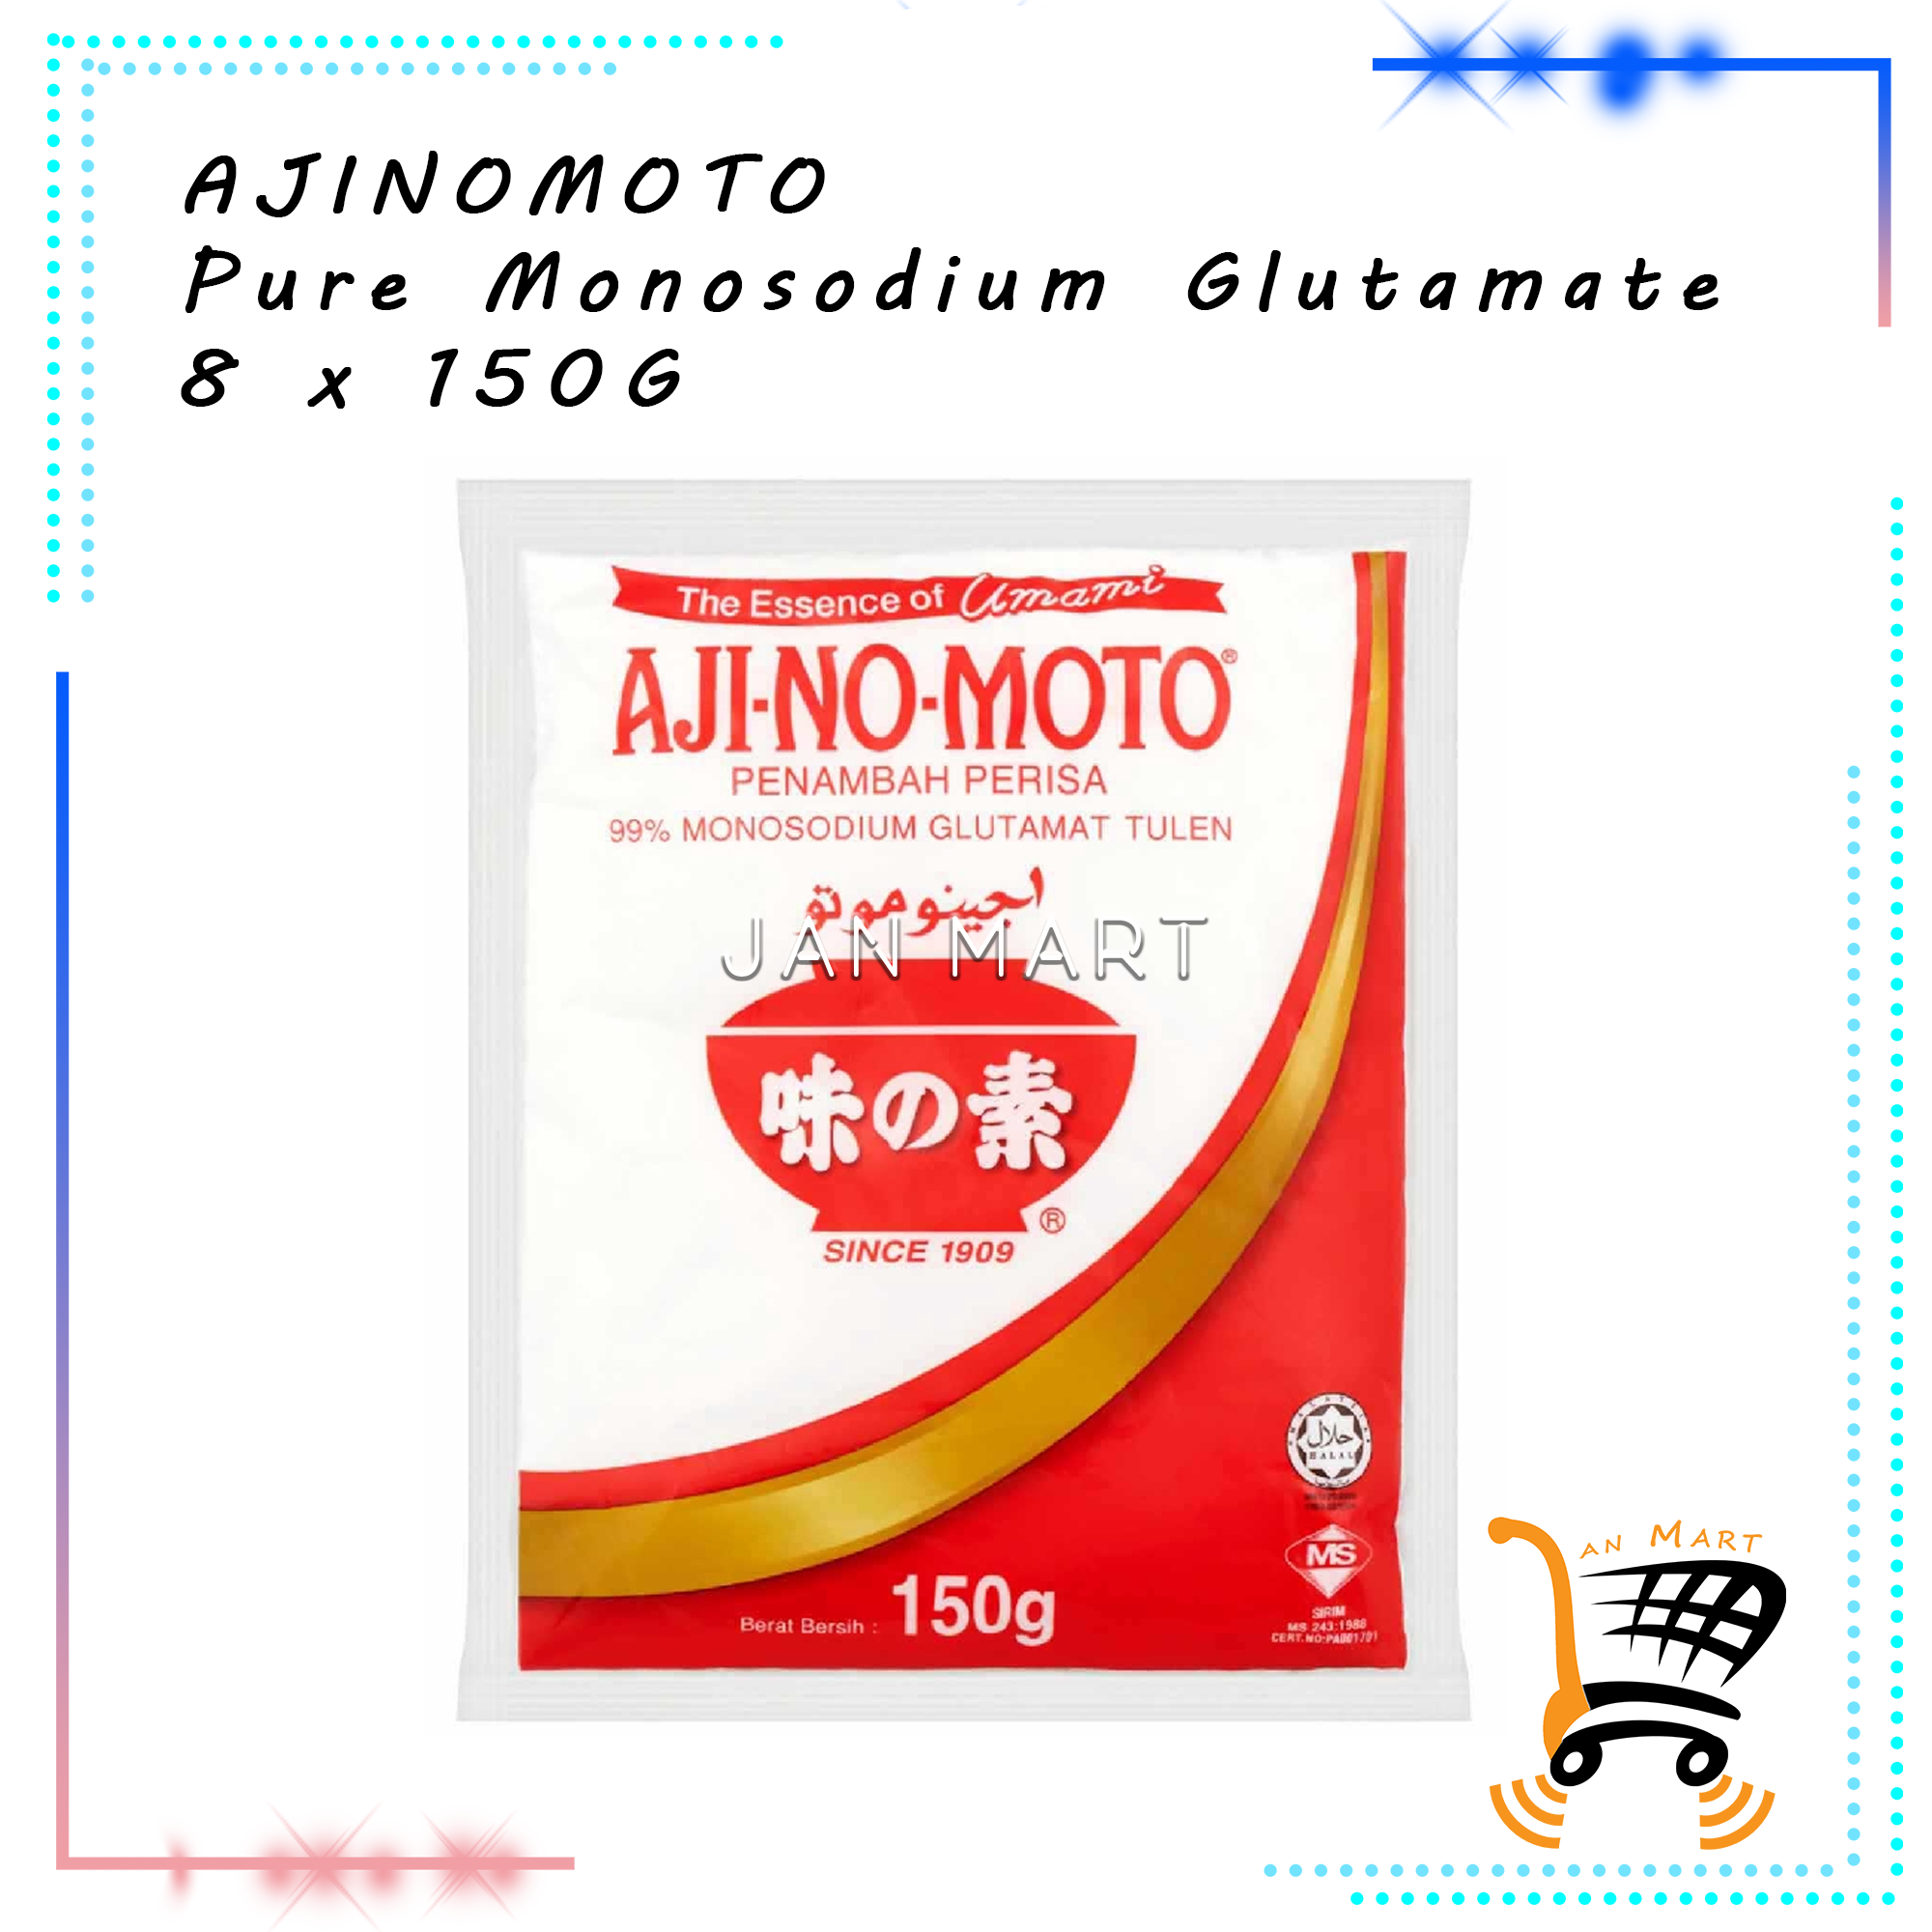 AJINOMOTO Pure Monosodium Glutamate Penambah Perisa 8 x 150G